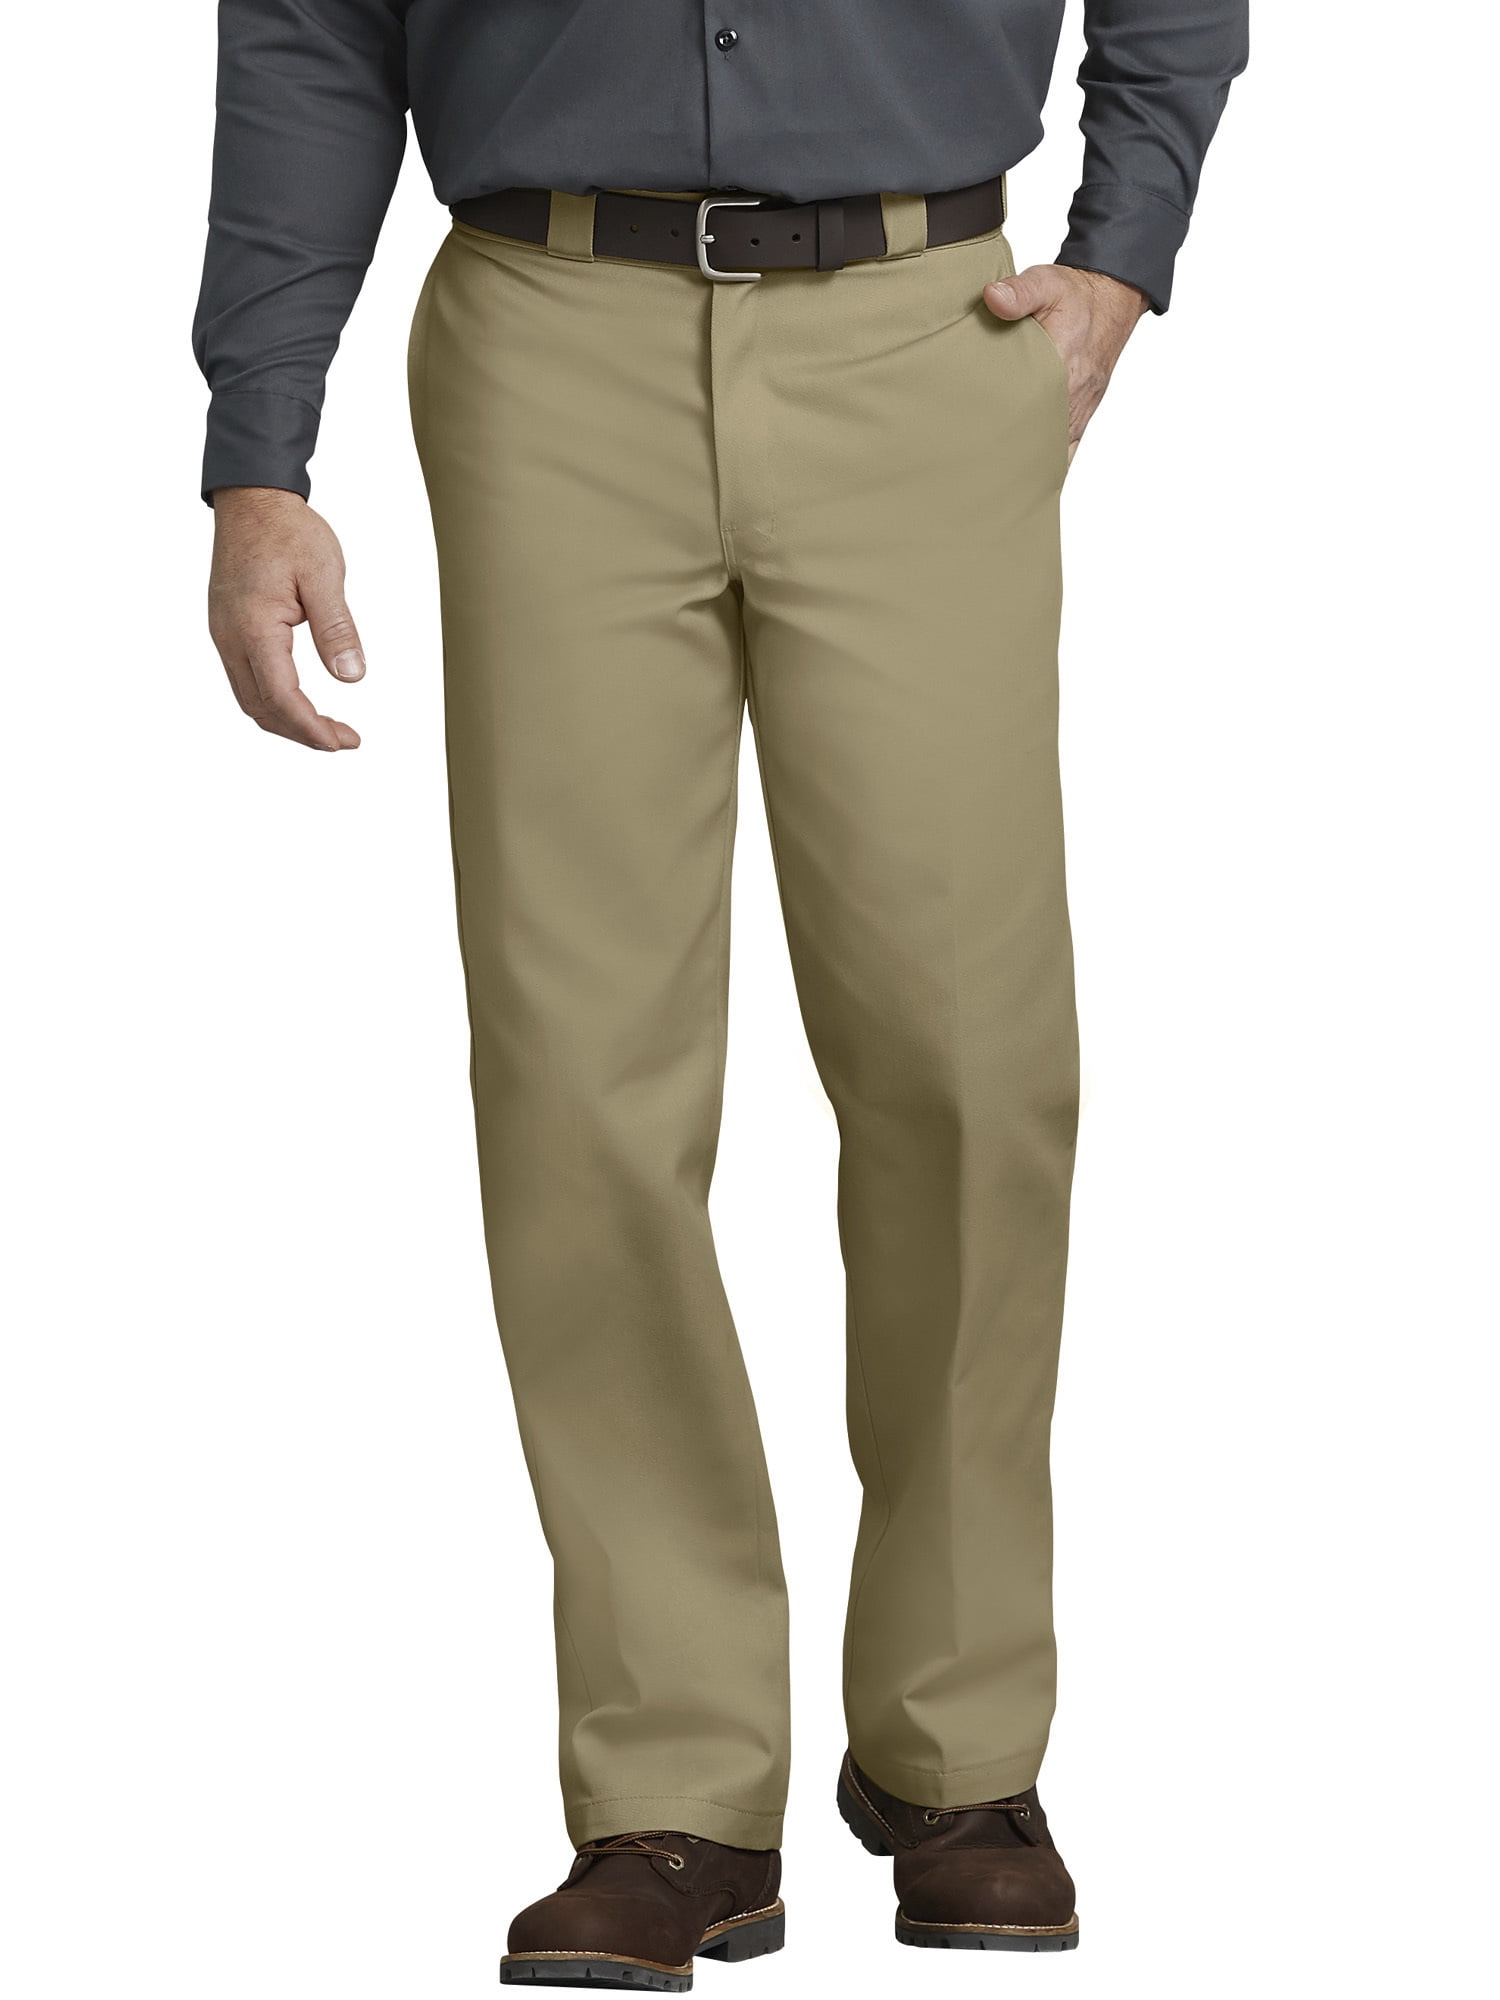 Khakis Sz Varies Dickies 874 Mens Work Pants Original Fit Classic Work Uniform 